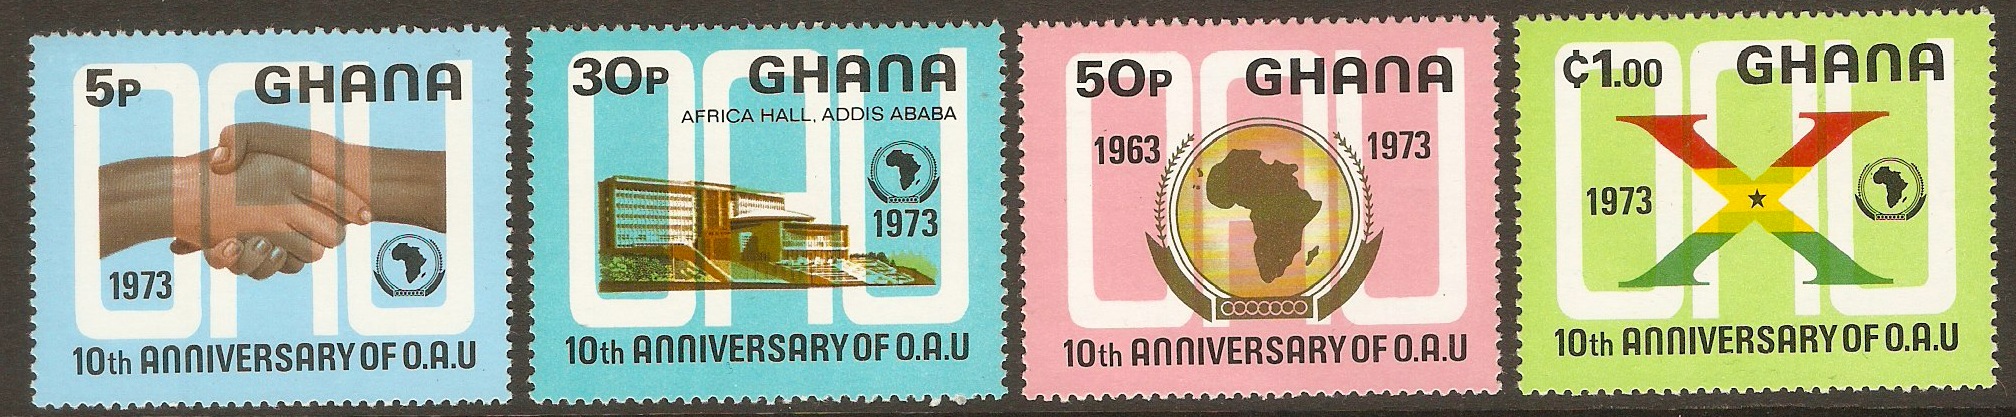 Ghana 1973 OAU Anniversary Set. SG686-SG689.